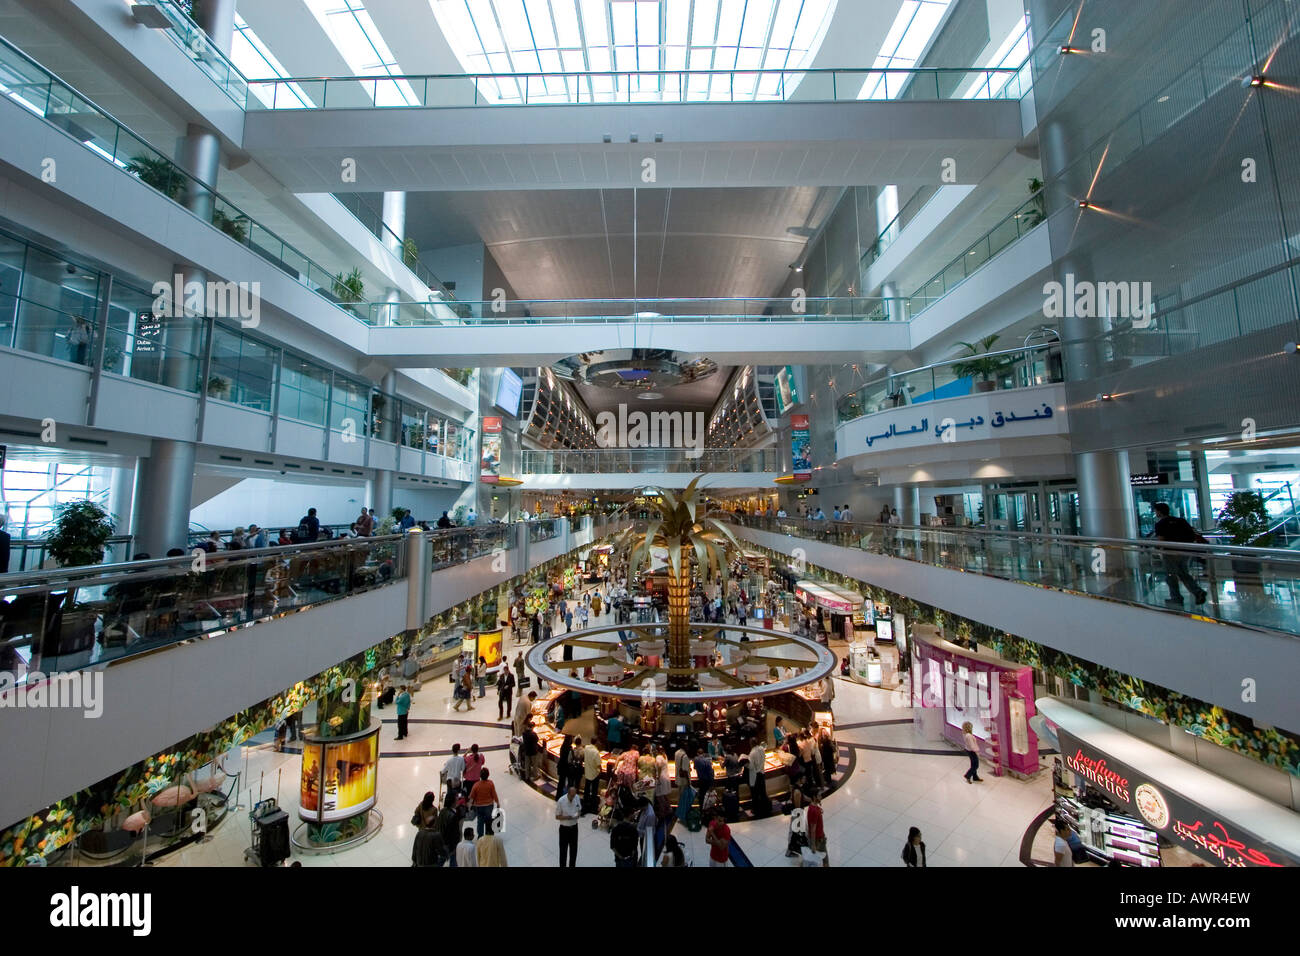 Duty Free Shopping, all'aeroporto di Dubai, Emirati Arabi Uniti, Emirati arabi uniti Foto Stock